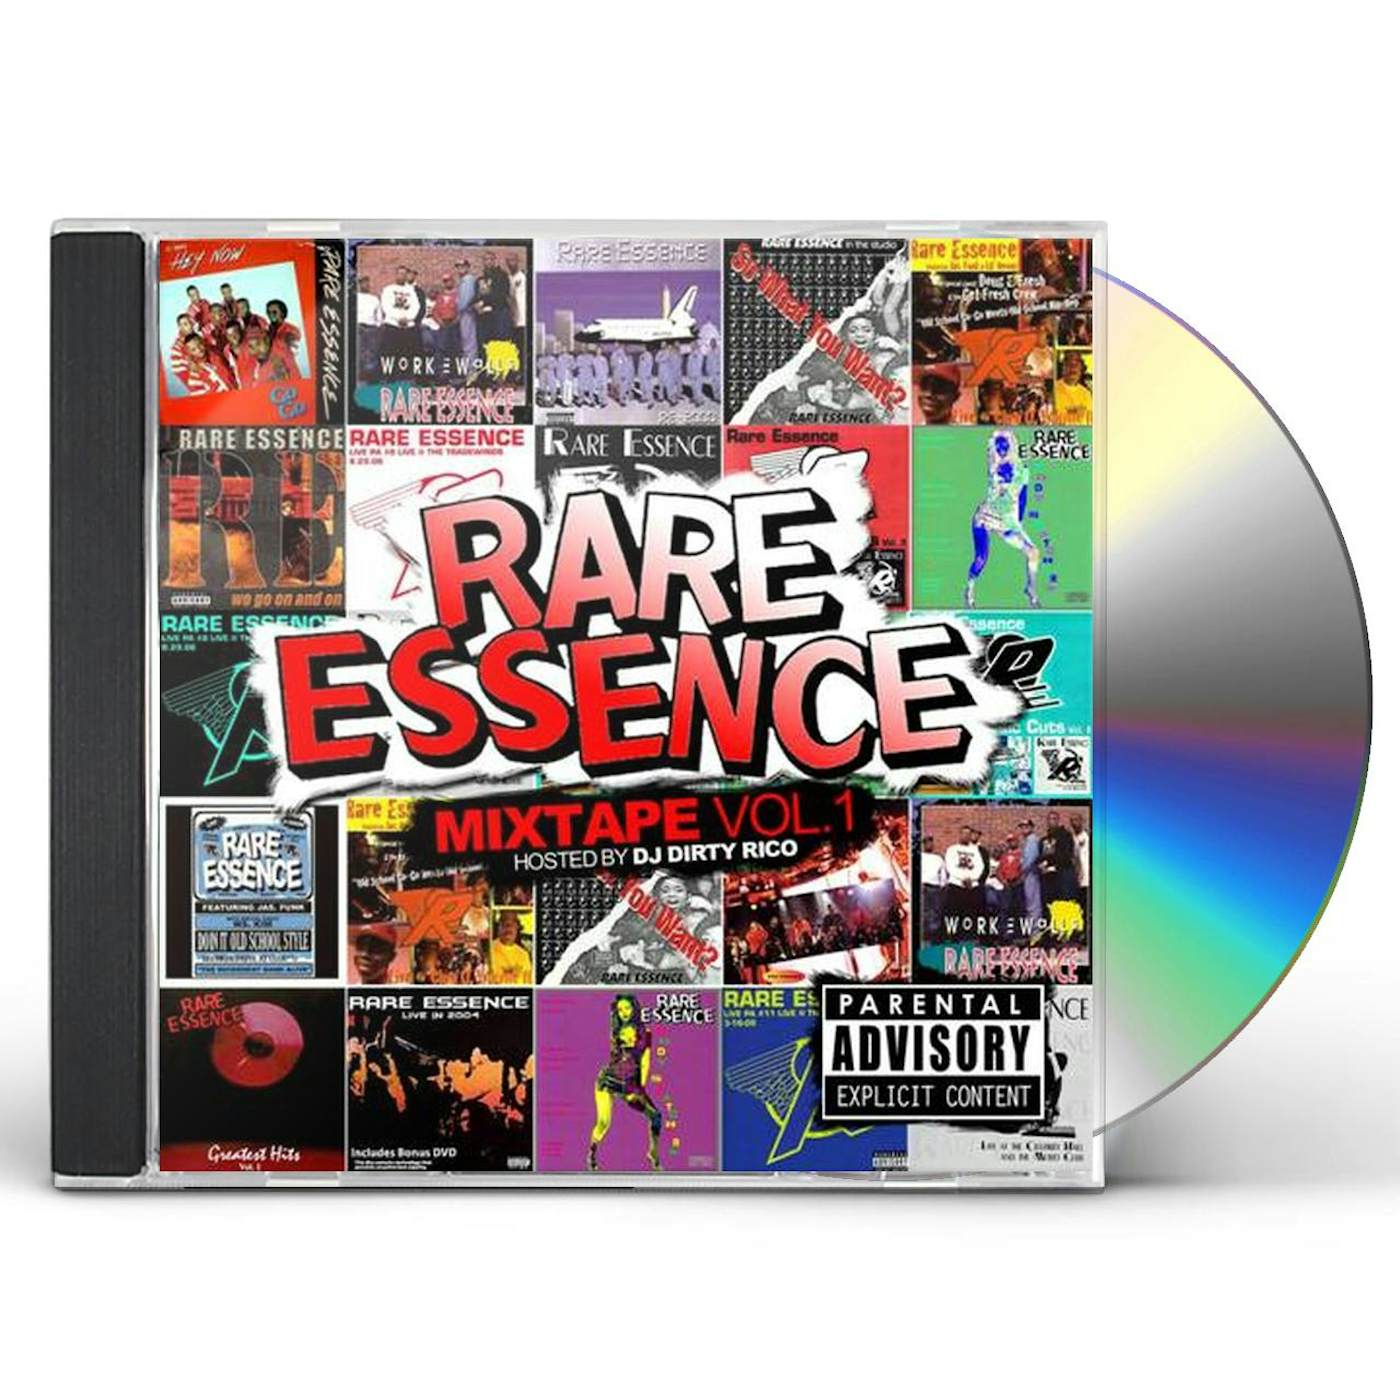 Rare Essence MIXTAPE 1 HOSTED BY DJ RICO CD